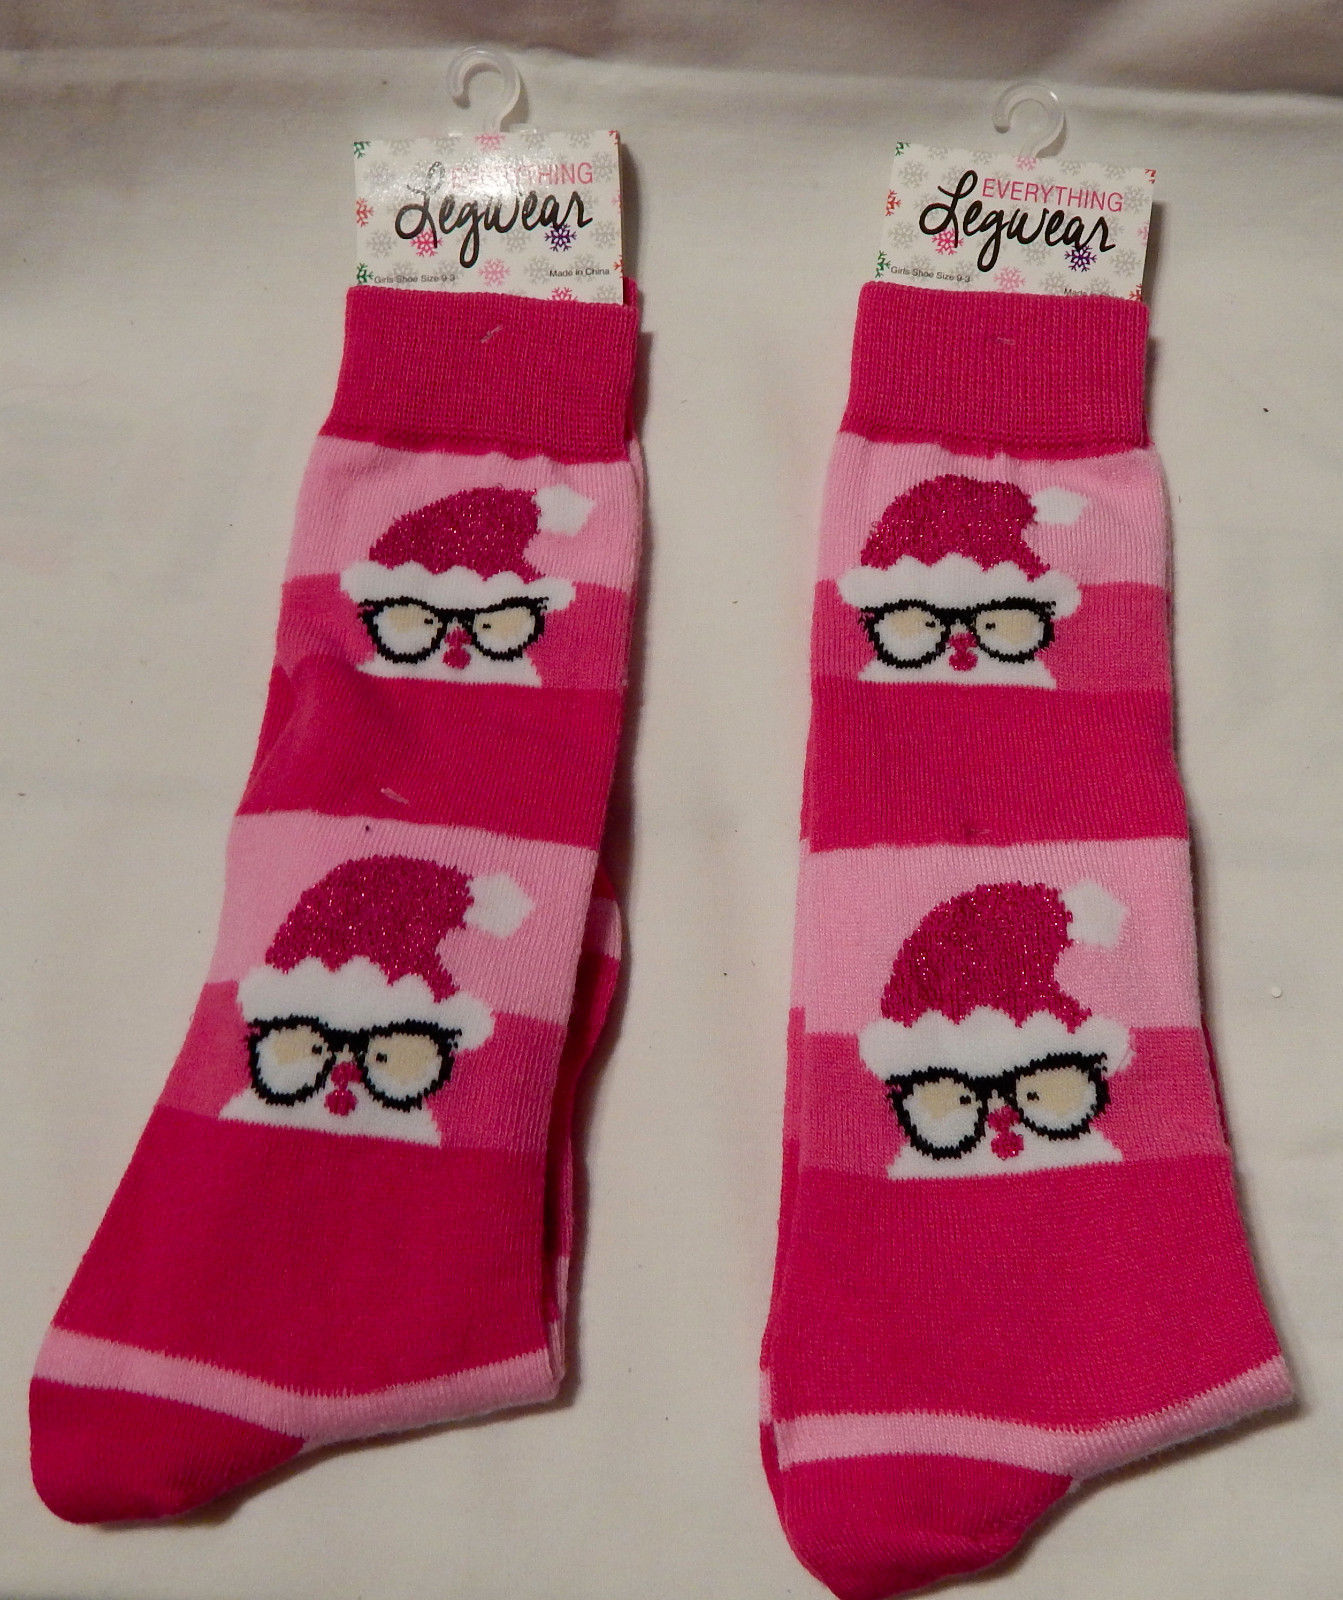 Primary image for Christmas Everything Legwear Novelty Socks Girls Size 9 to 3 2pr Pink Santa 27C